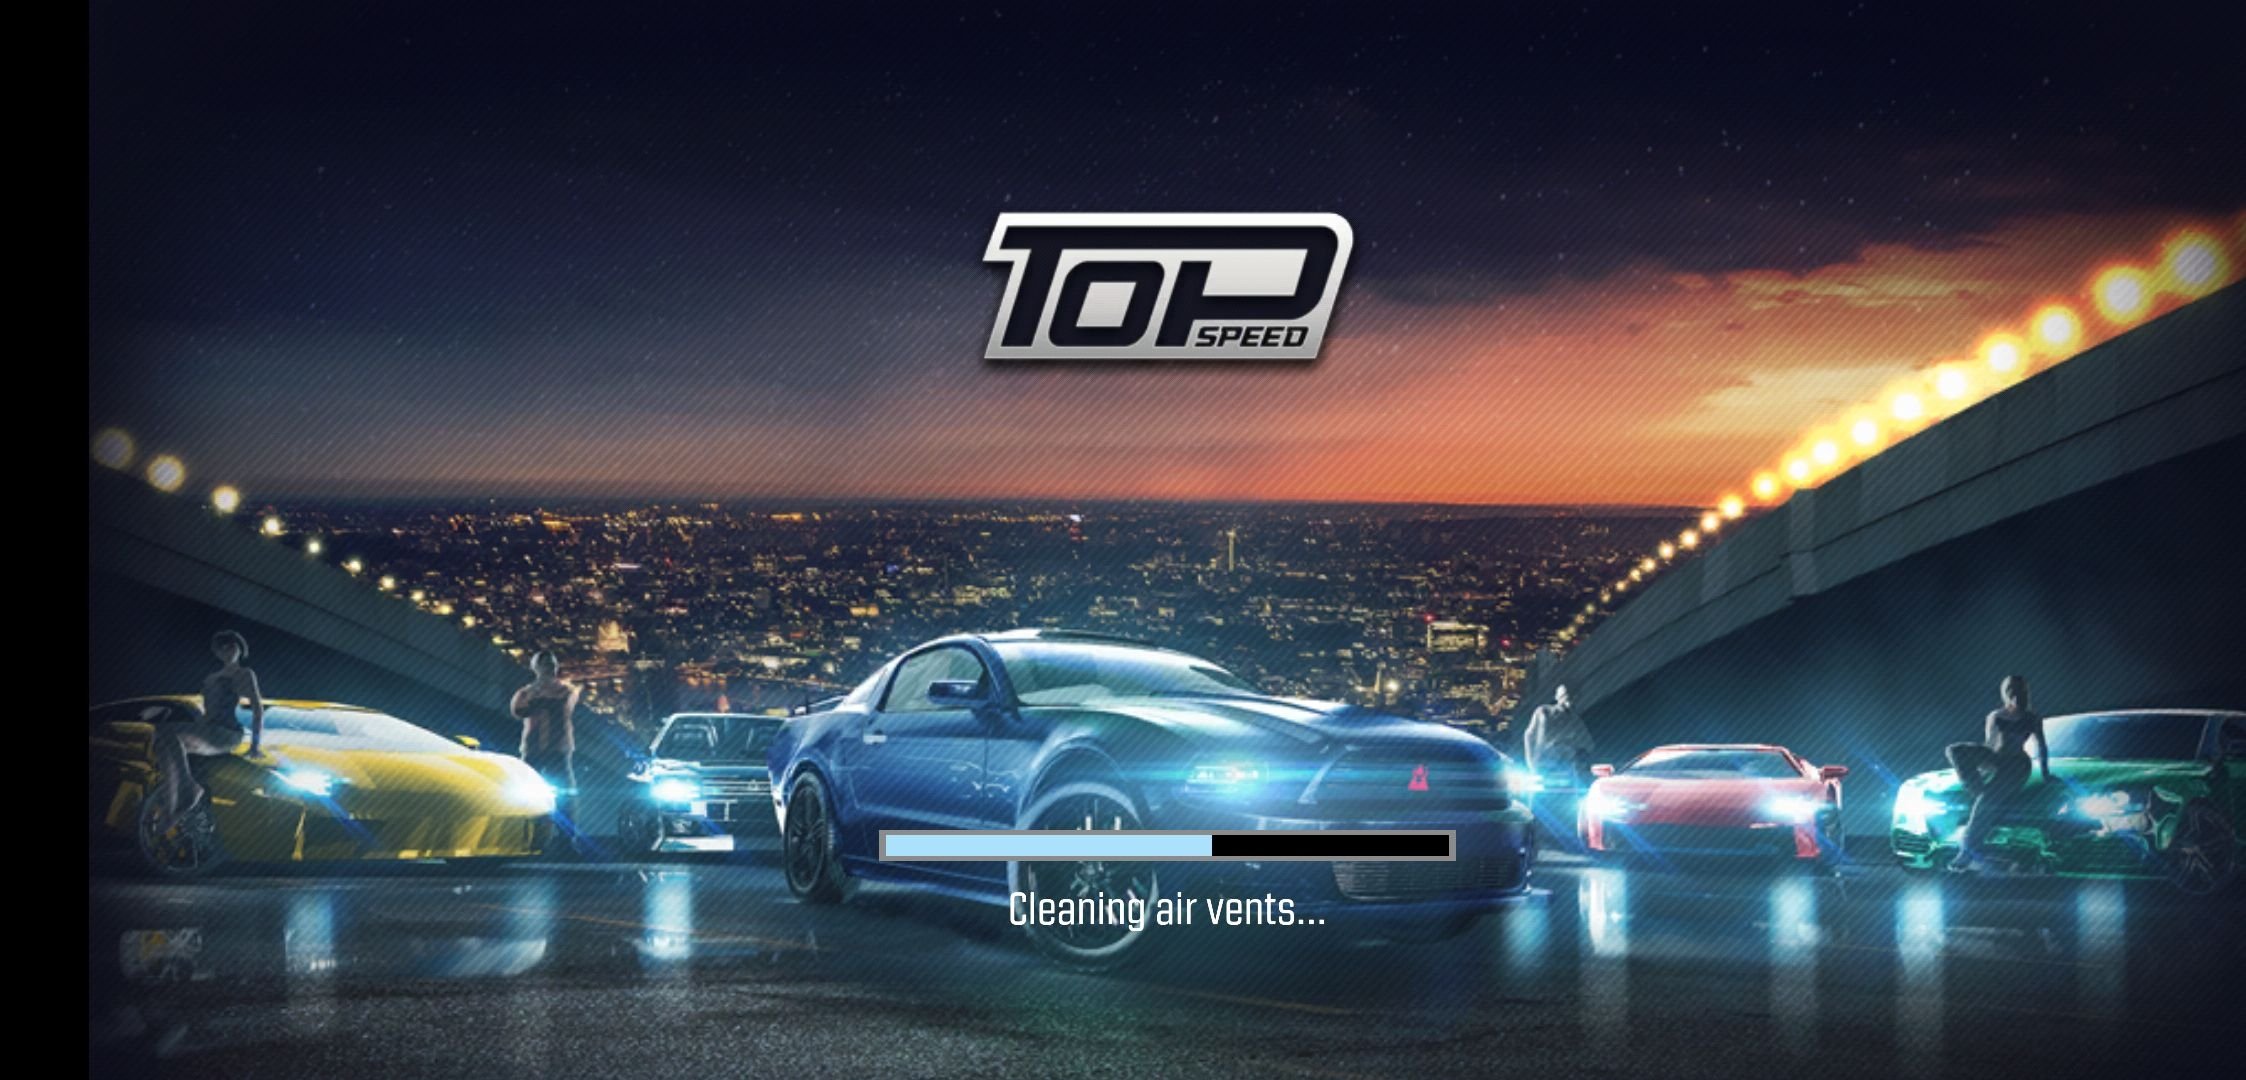 Top 10 Car Images Download